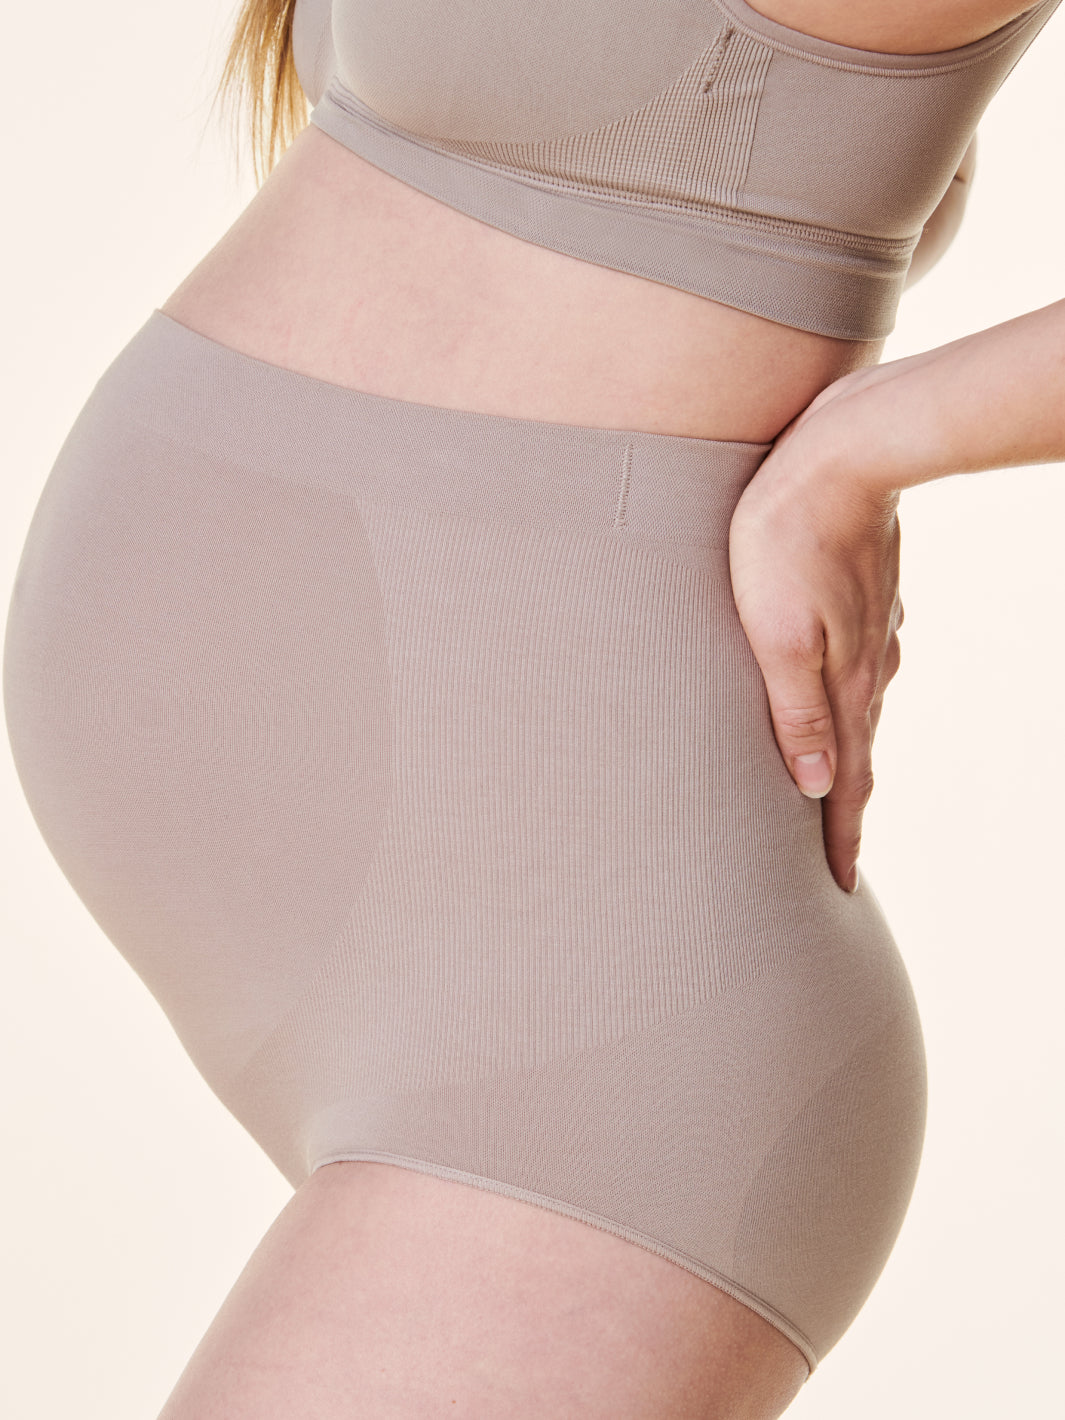 Yubatuo Lingerie for Women 3Pcs Cotton U-Shaped Low Waist Maternity  Underwear Pregnant Panties Pregnancy Briefs